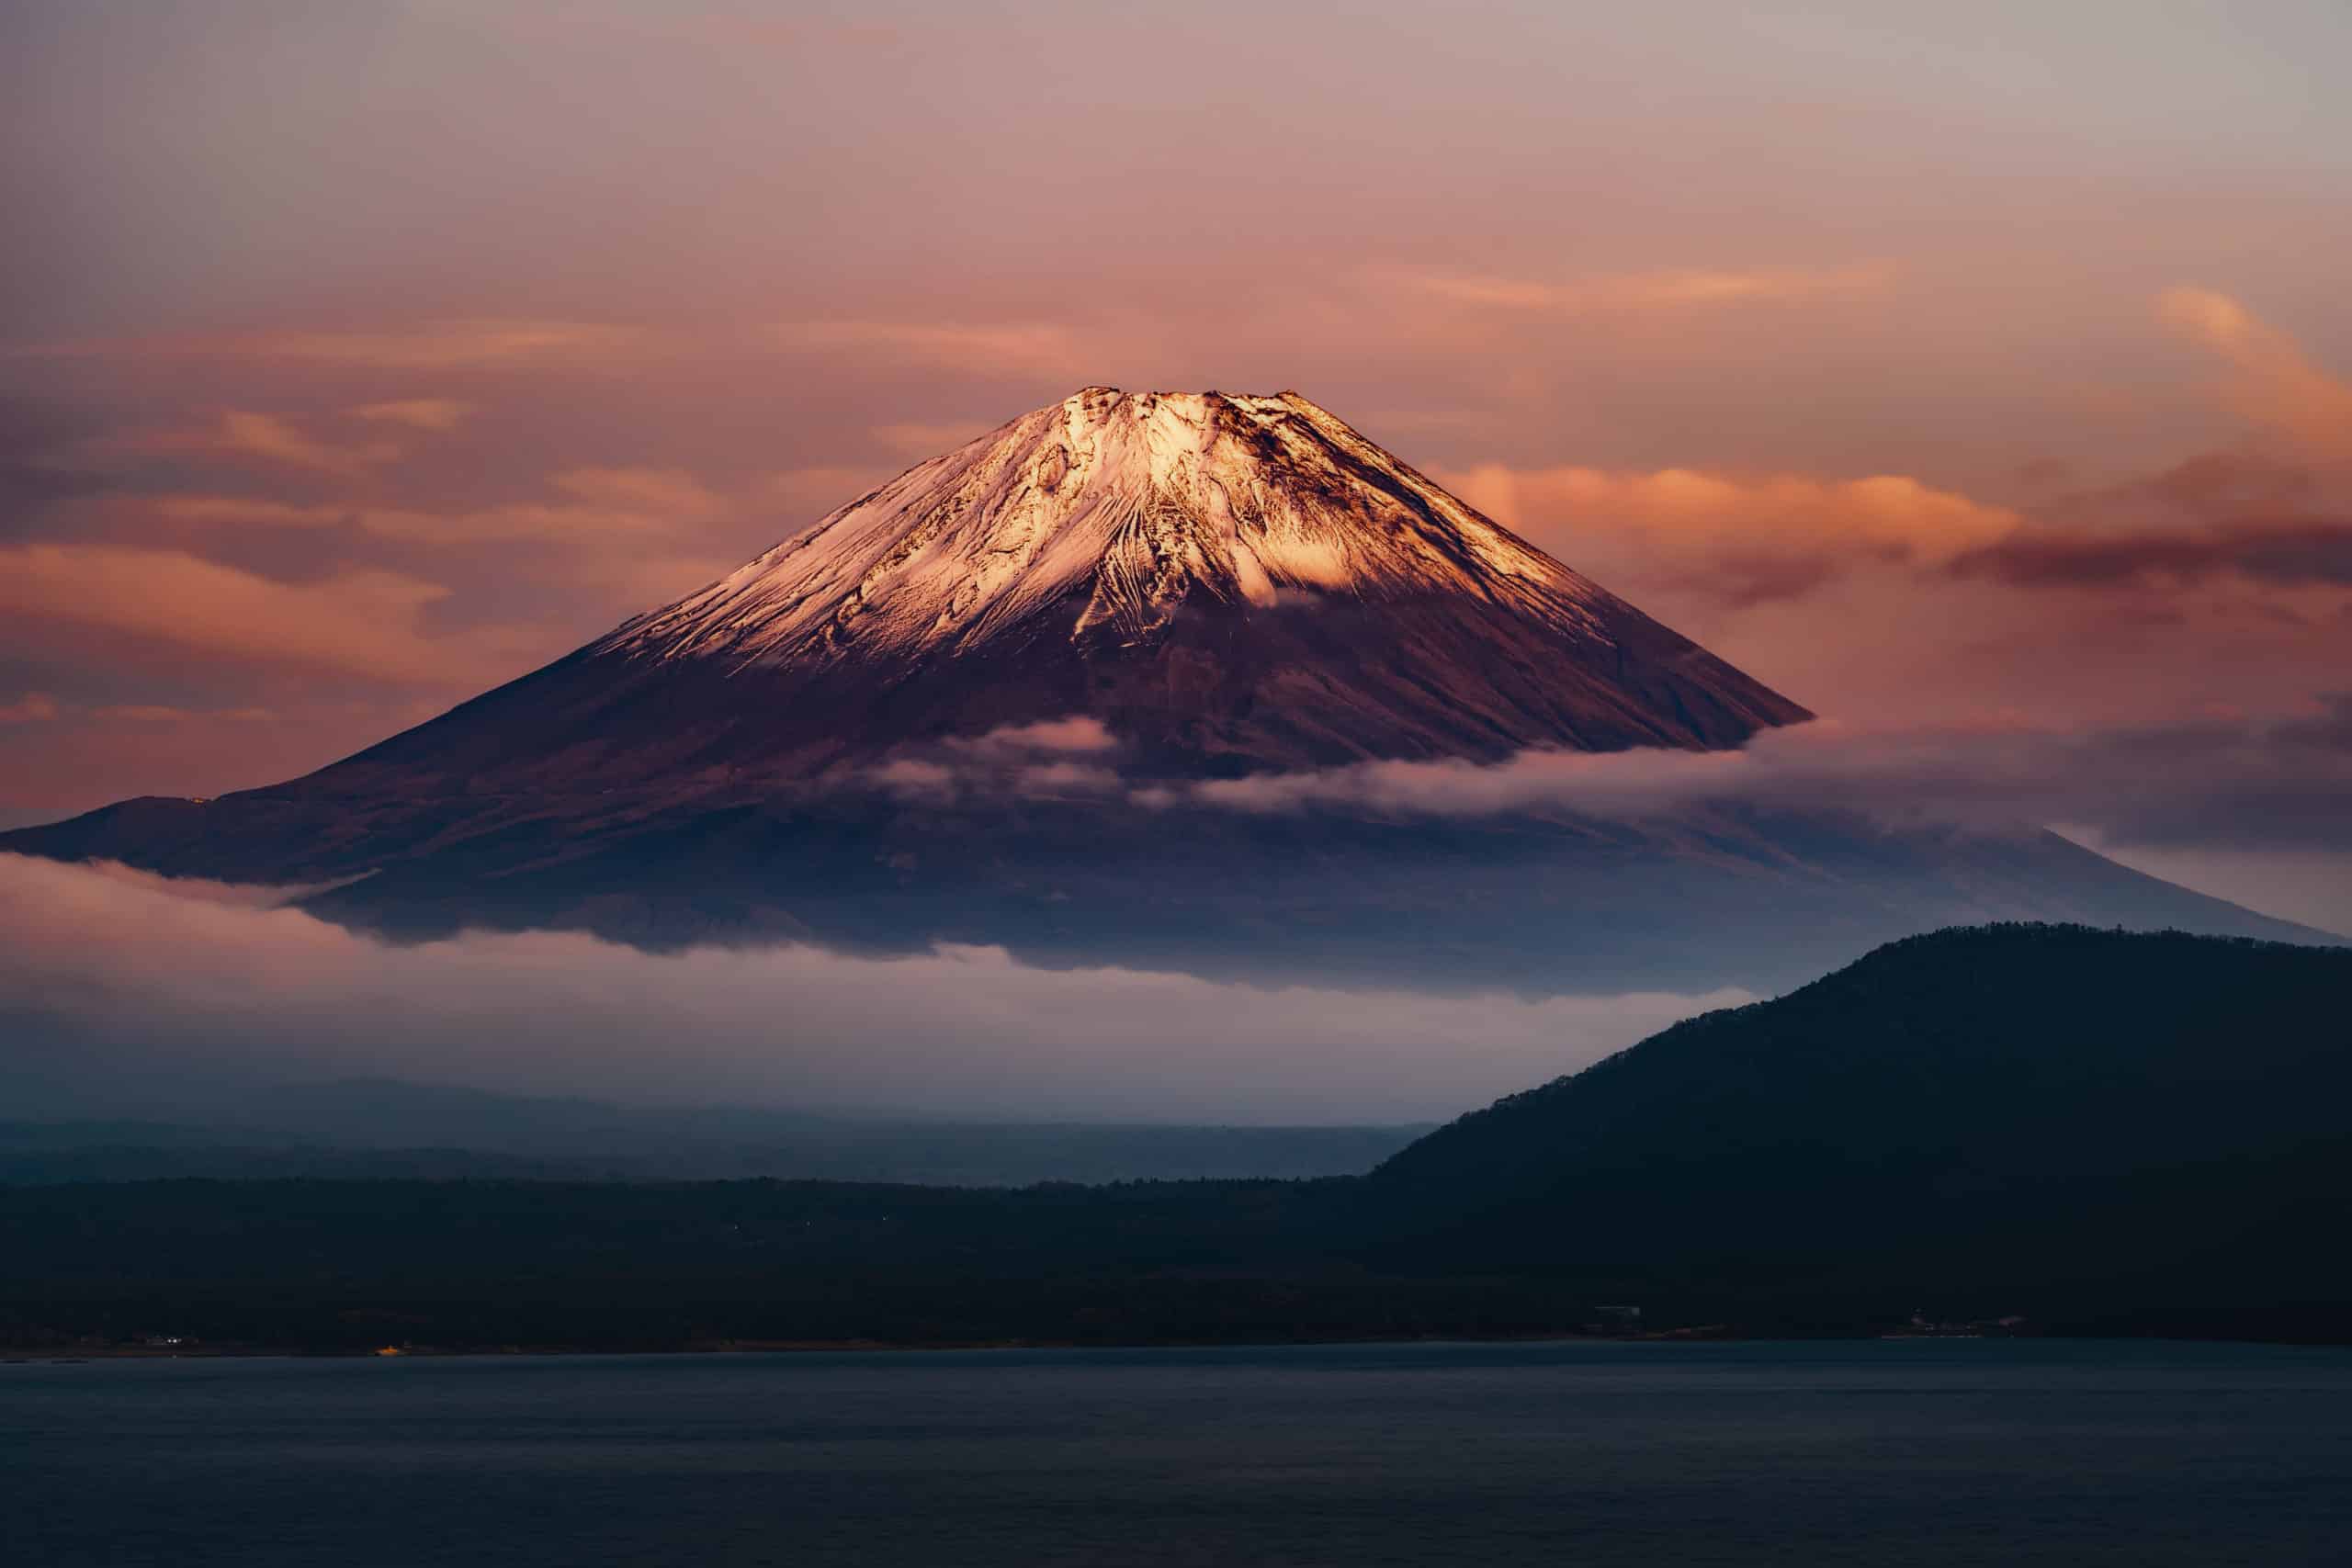 Beautiful dawn landscape of Fuji mountain with Kawaguchiko lake, Japan.